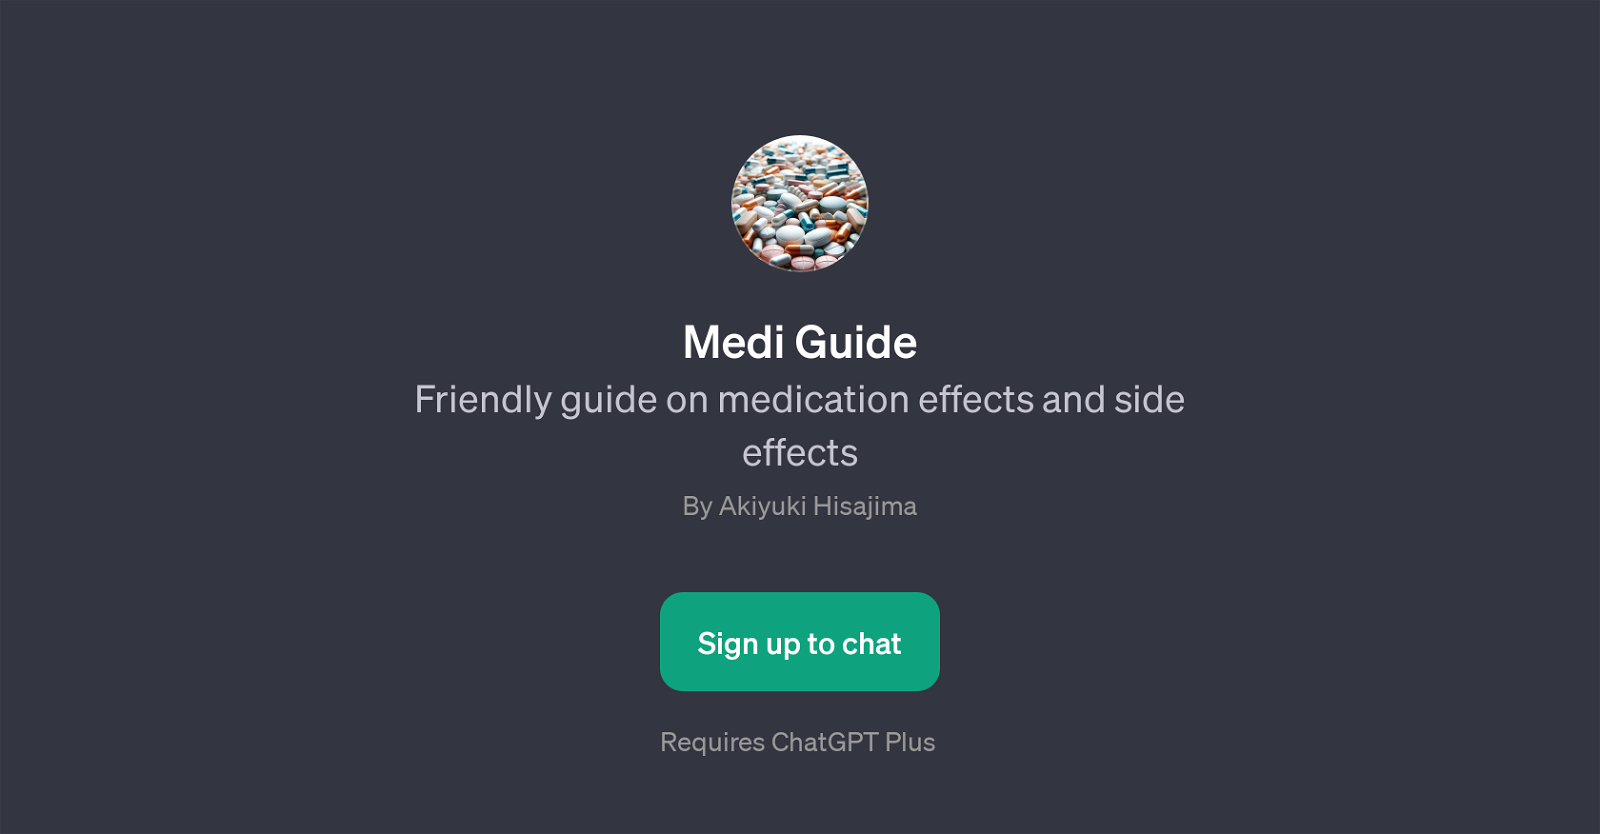 Medi Guide website